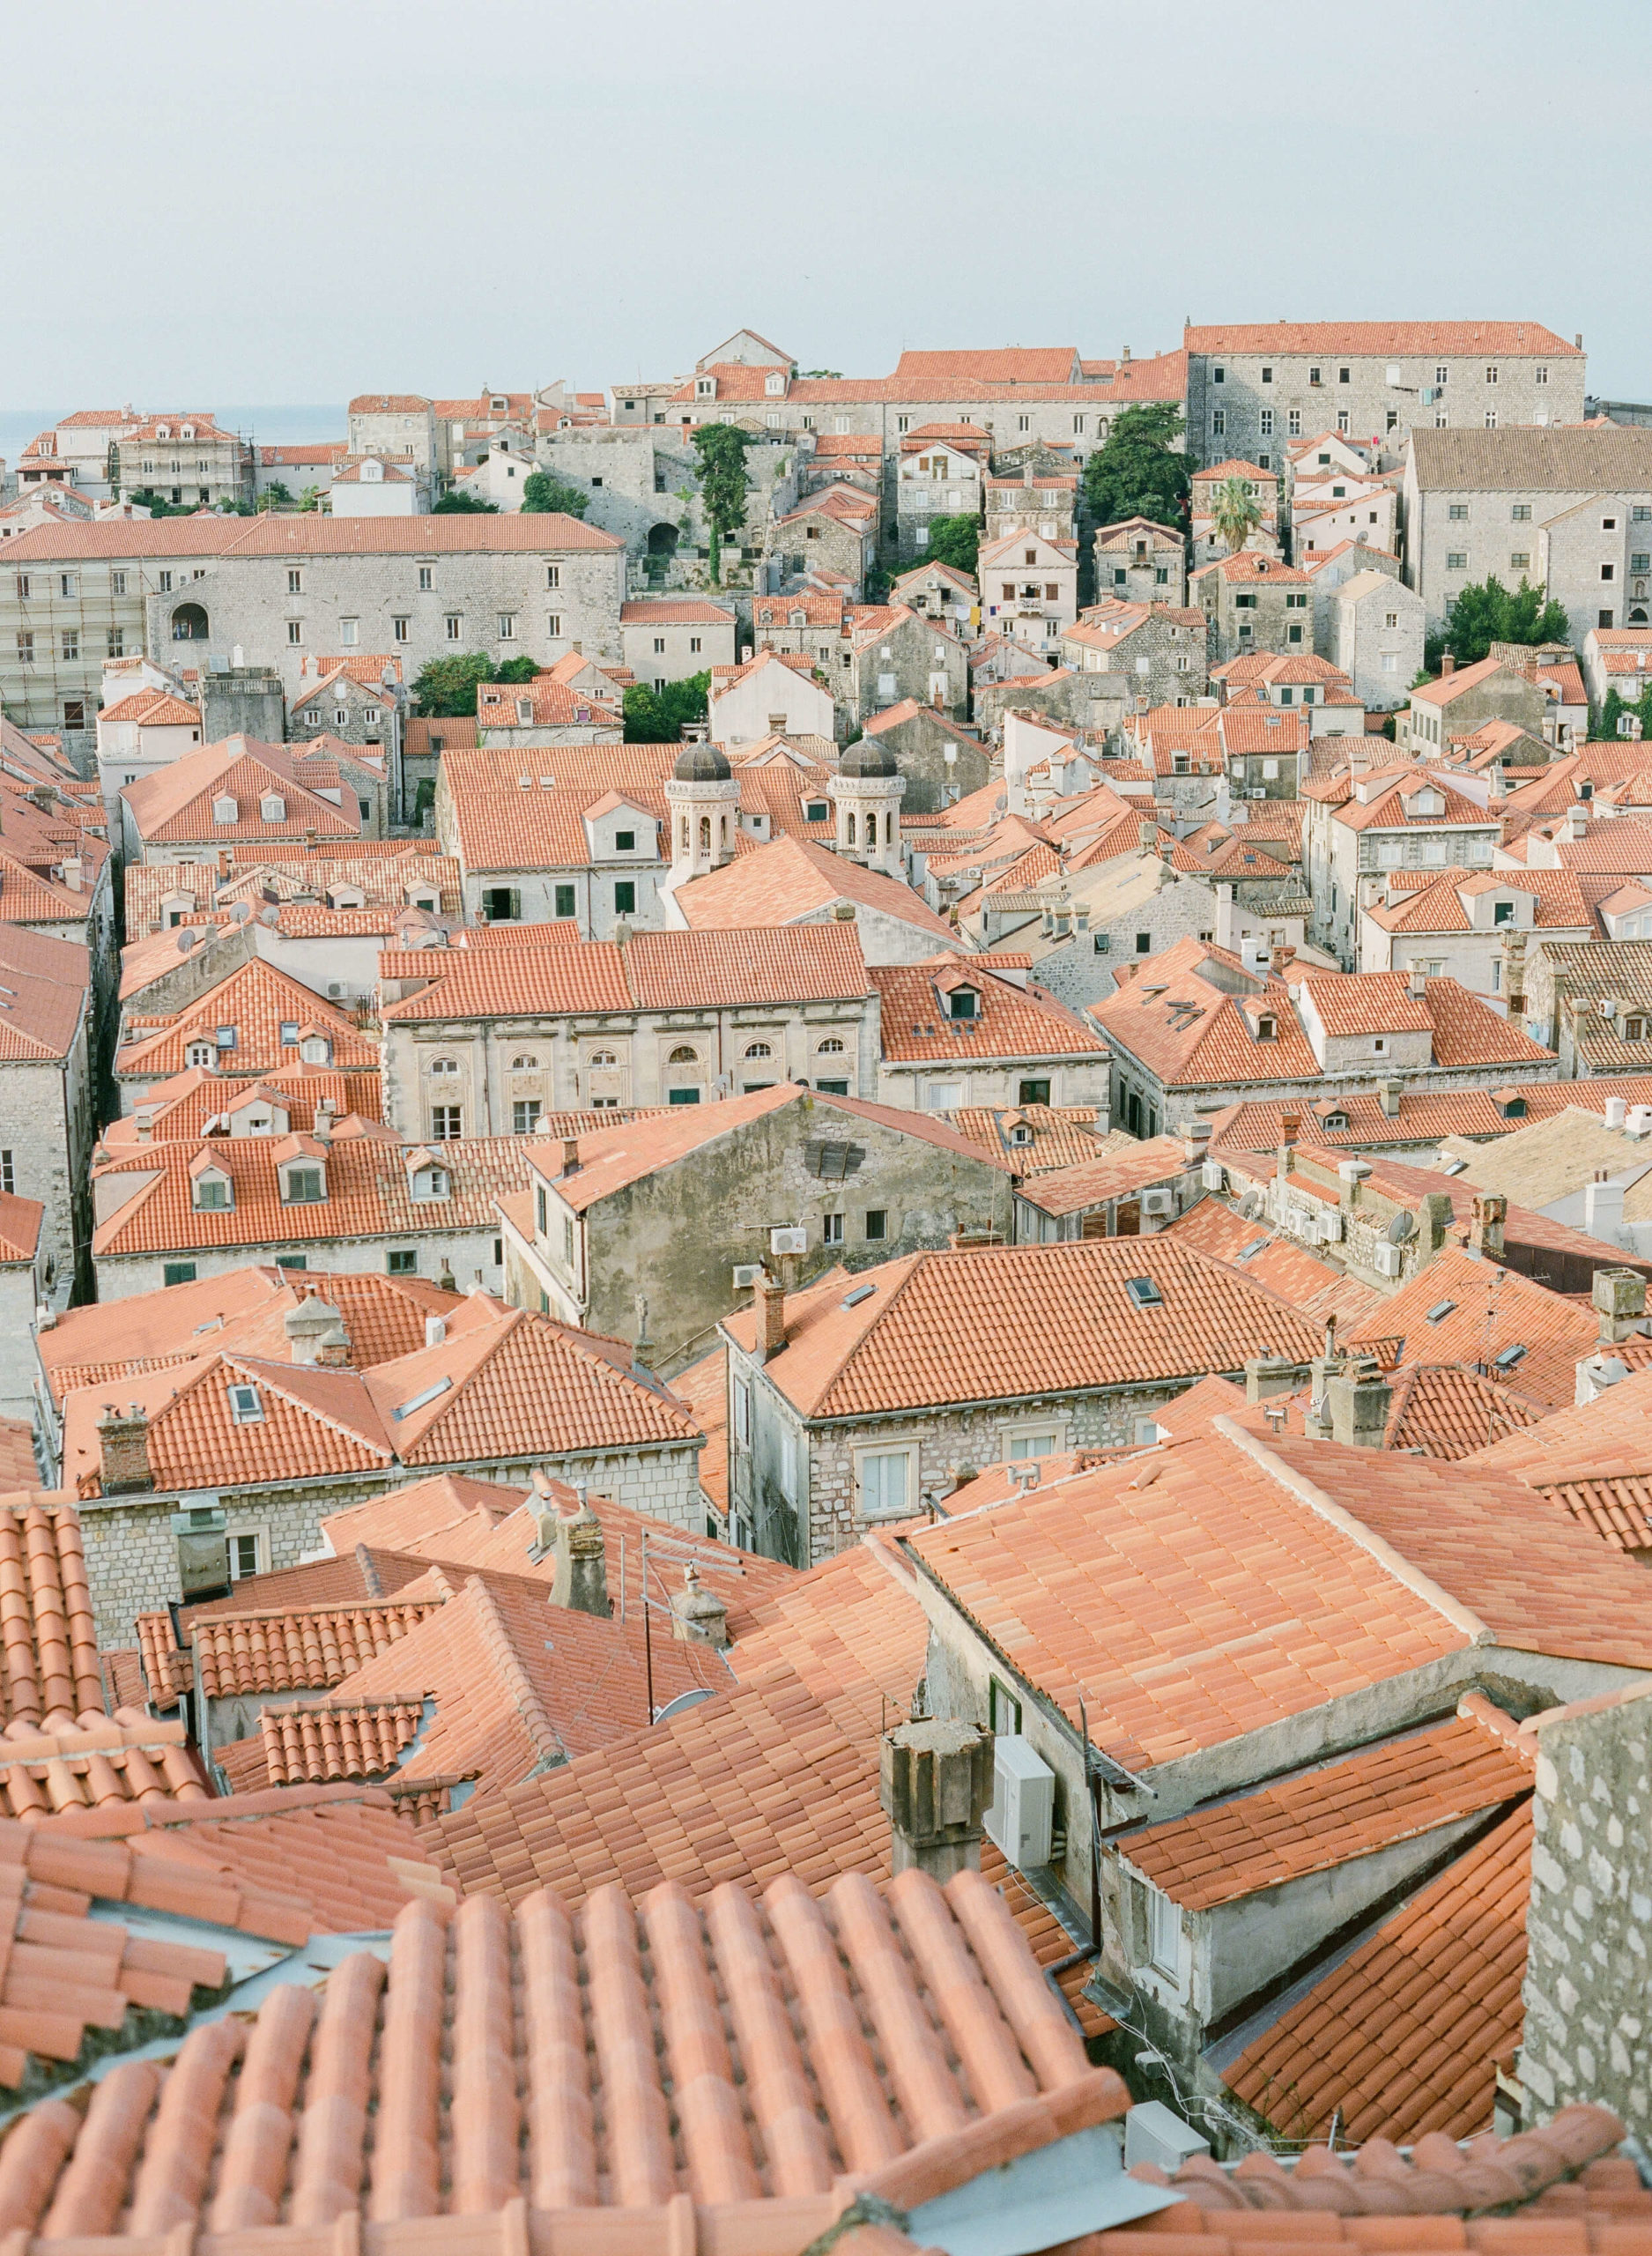 Historical city of Dubrovnik, Croatia